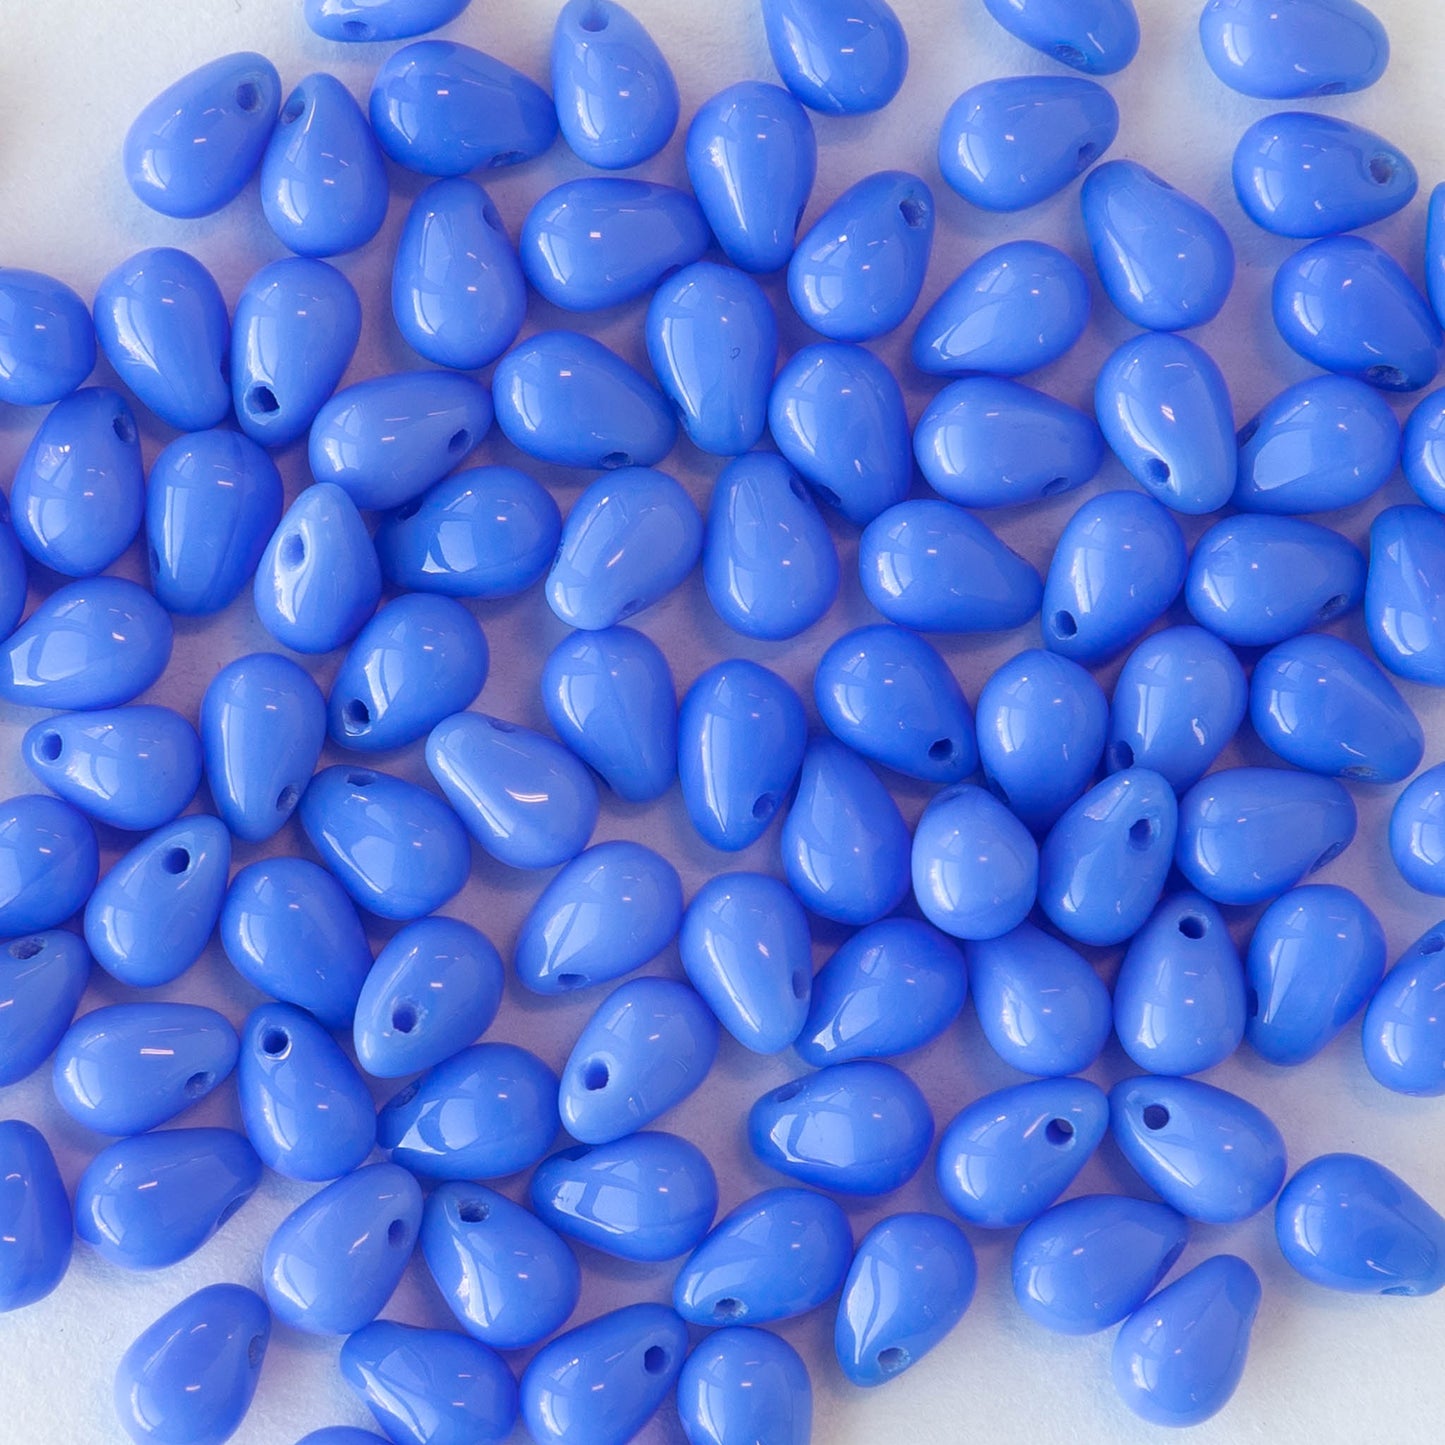 4x6mm Glass Teardrop Beads - Periwinkle Blue - 100 Beads